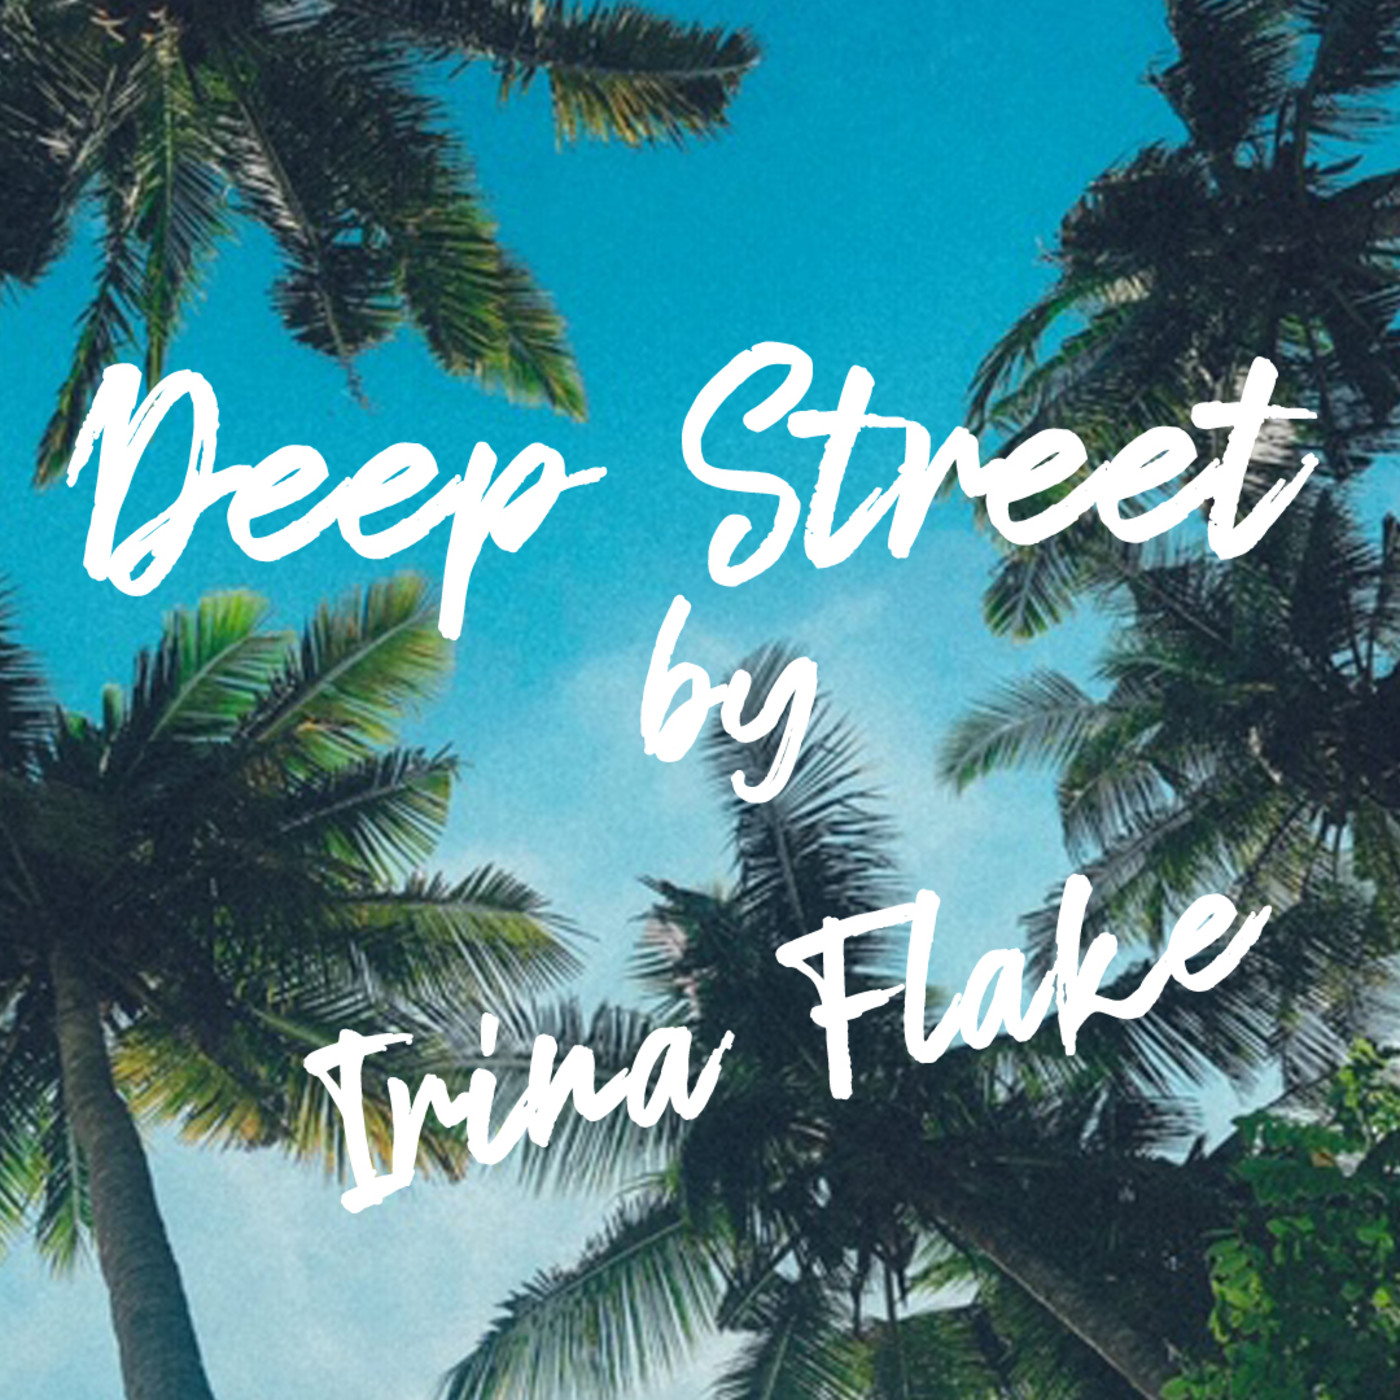 Deep Street by Irina Flake 07 @ Flaix FM 12.05.19